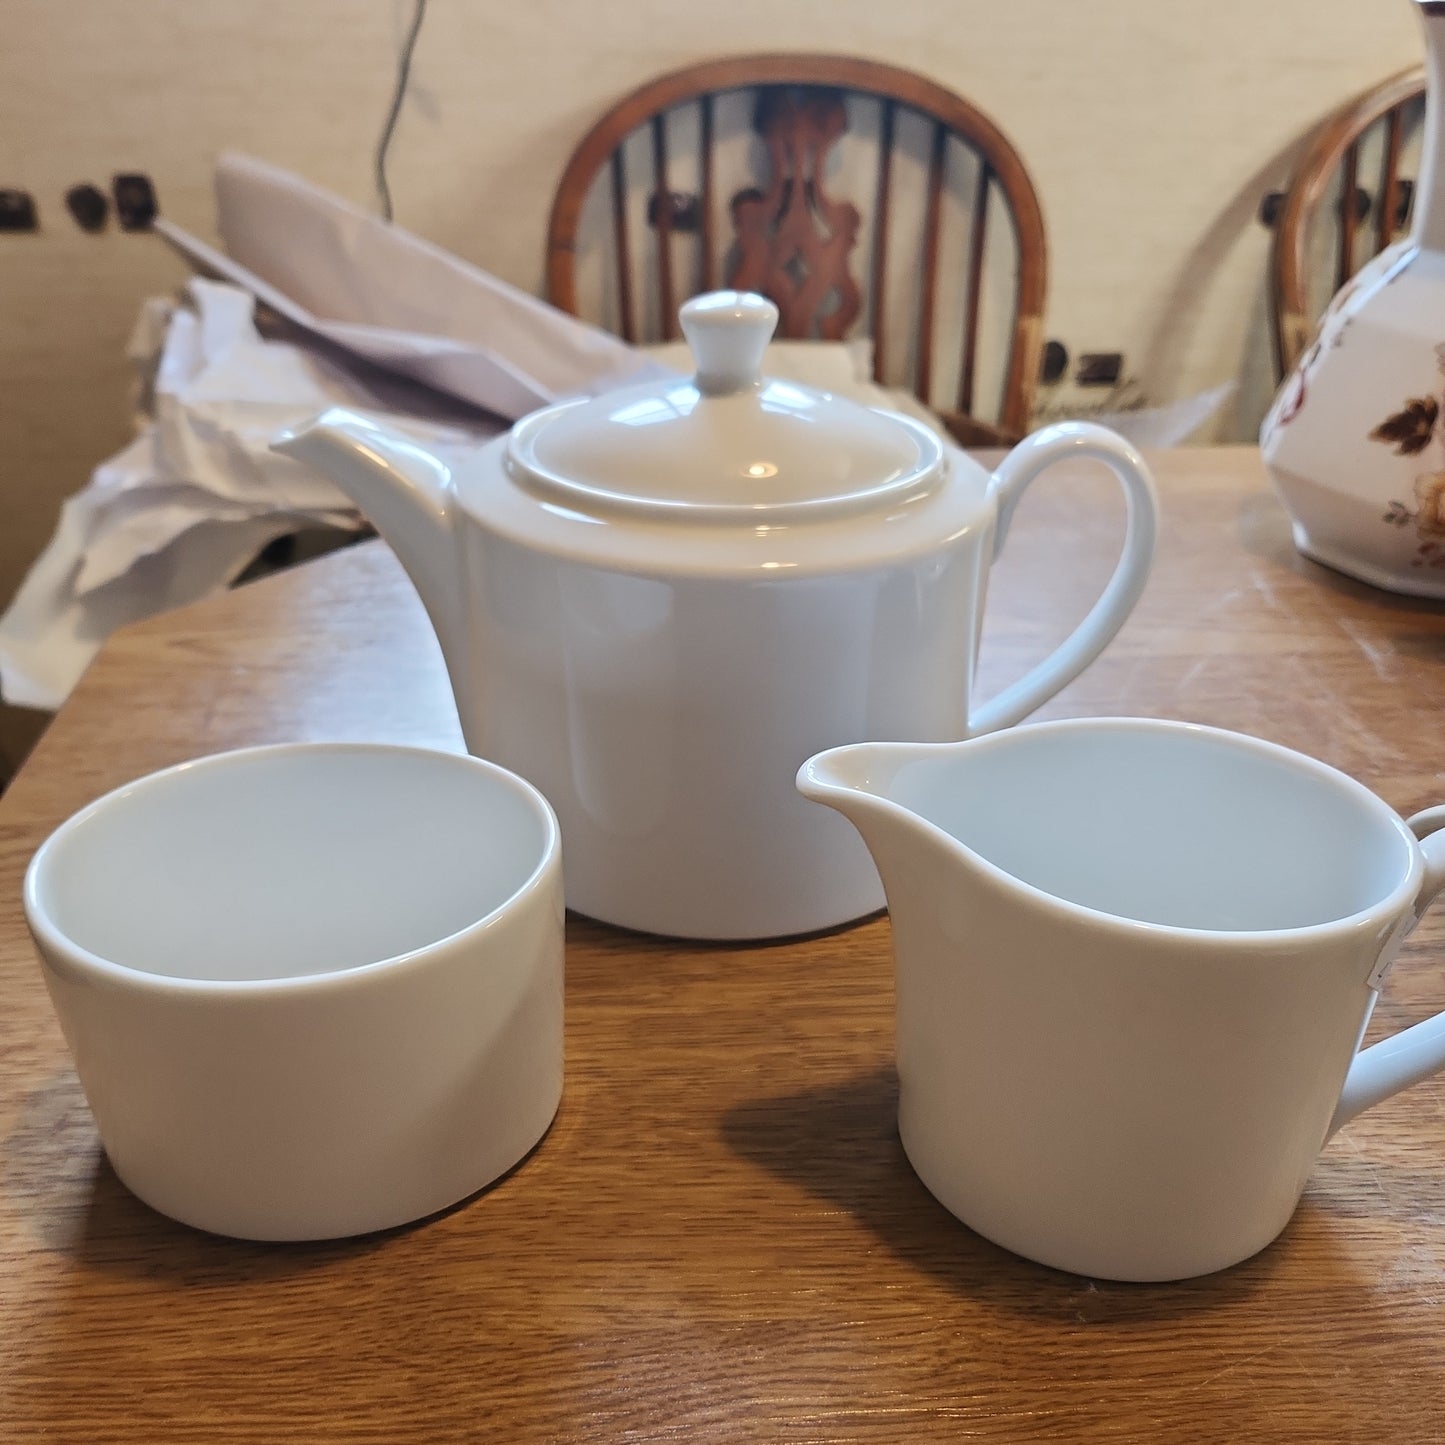 Royal Worcester classic white big tea pot VGC